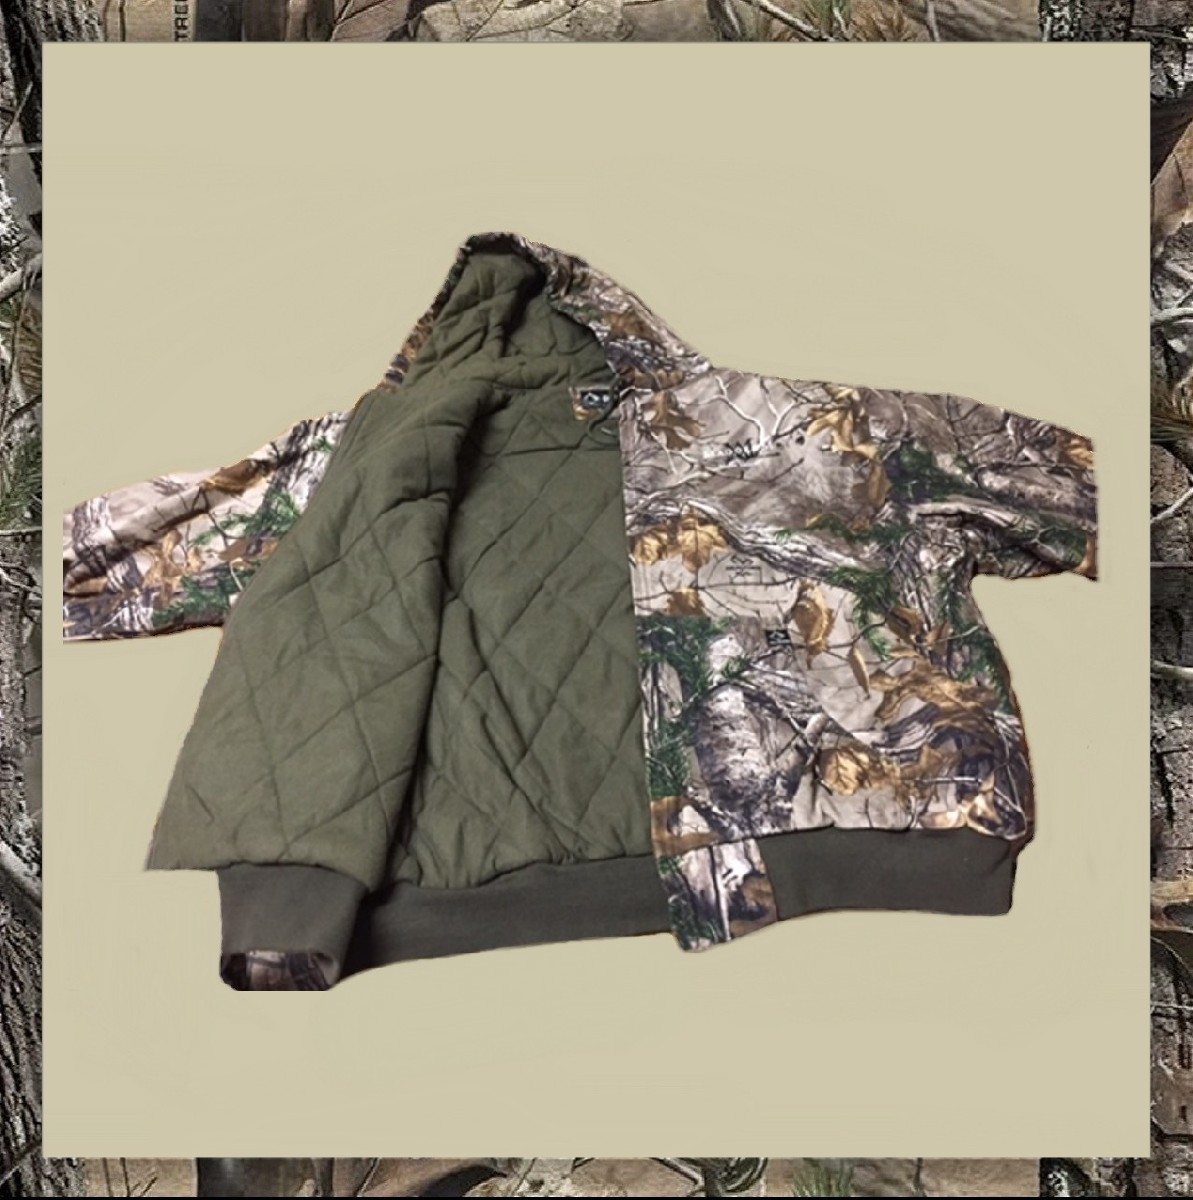 Product Image for MadoroM Hooded Camouflage Jacket